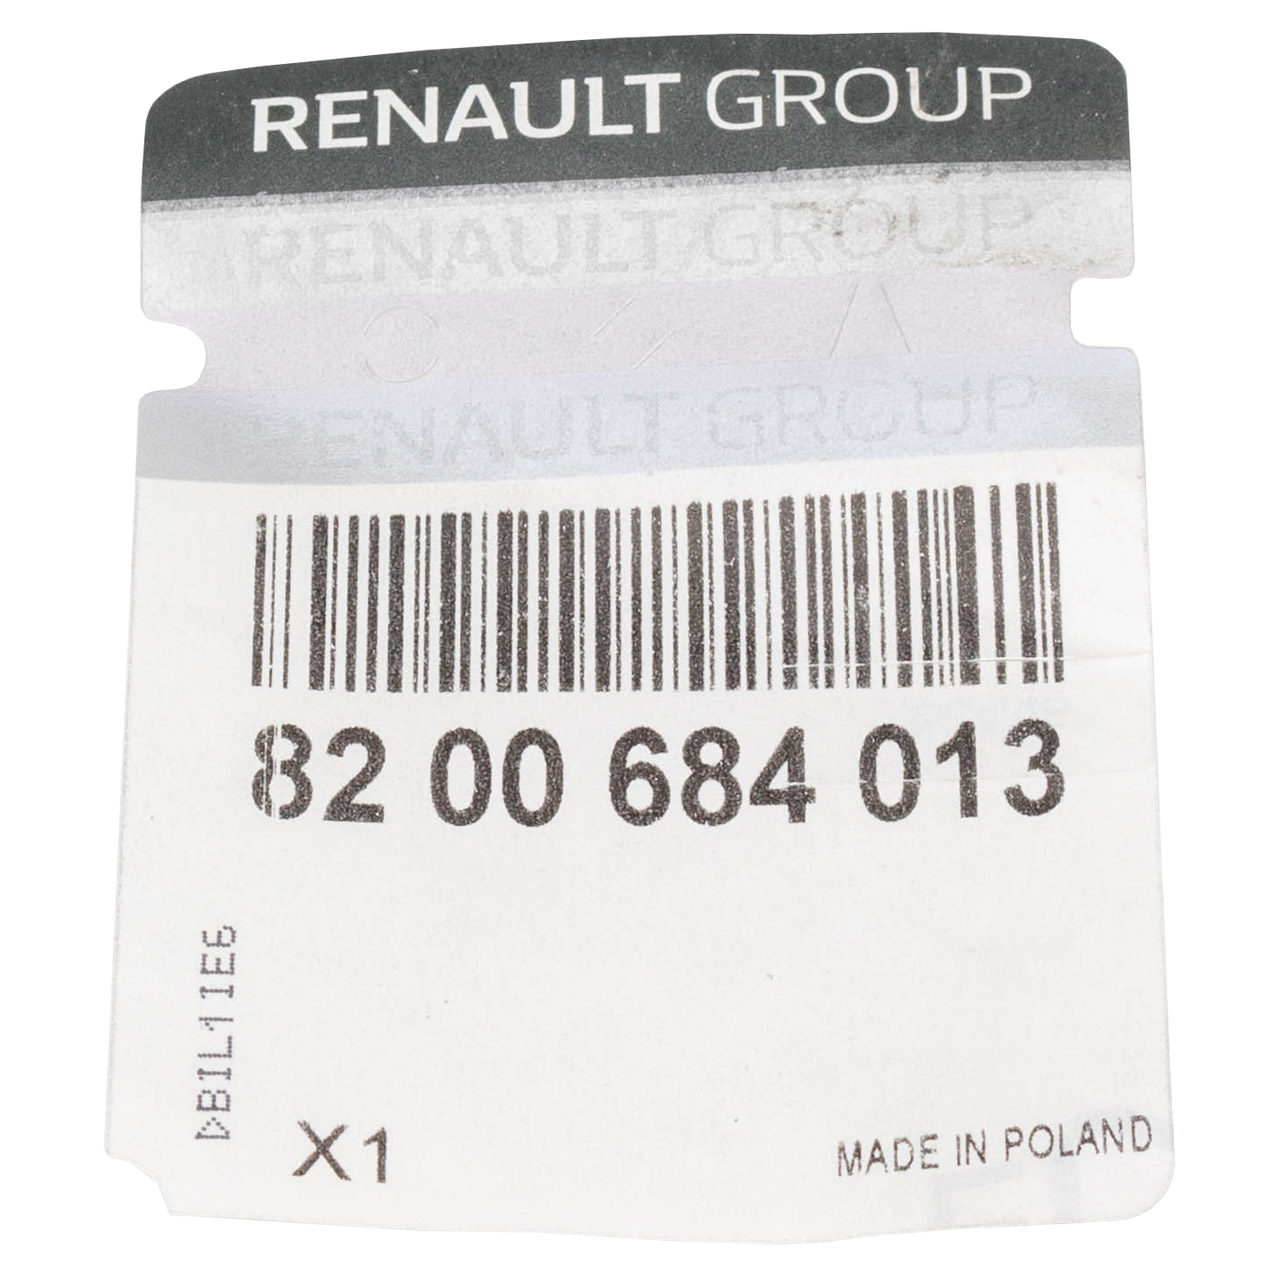 ORIGINAL Renault Gurtschloss Sicherheitsgurt Grand Modus rechts 8200684013